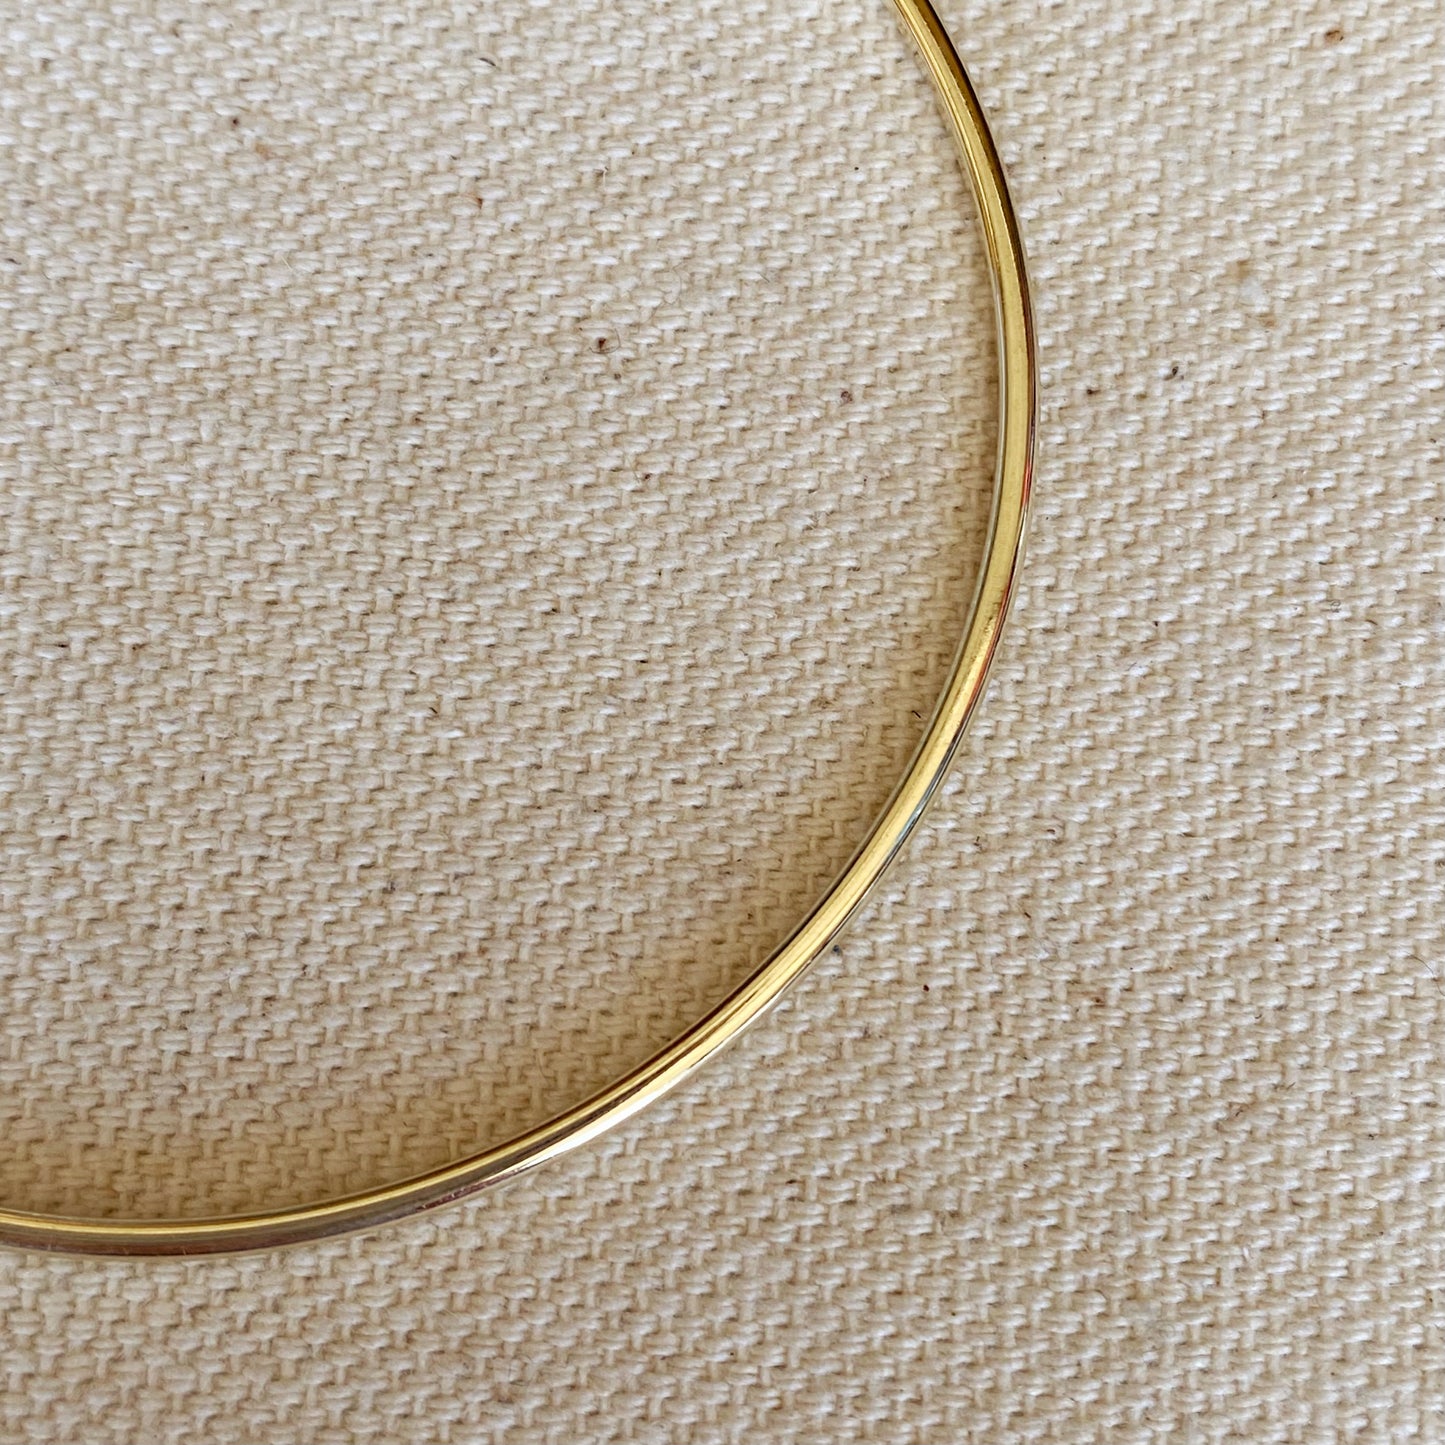 GoldFi 18k Gold Filled Bangle Bracelet